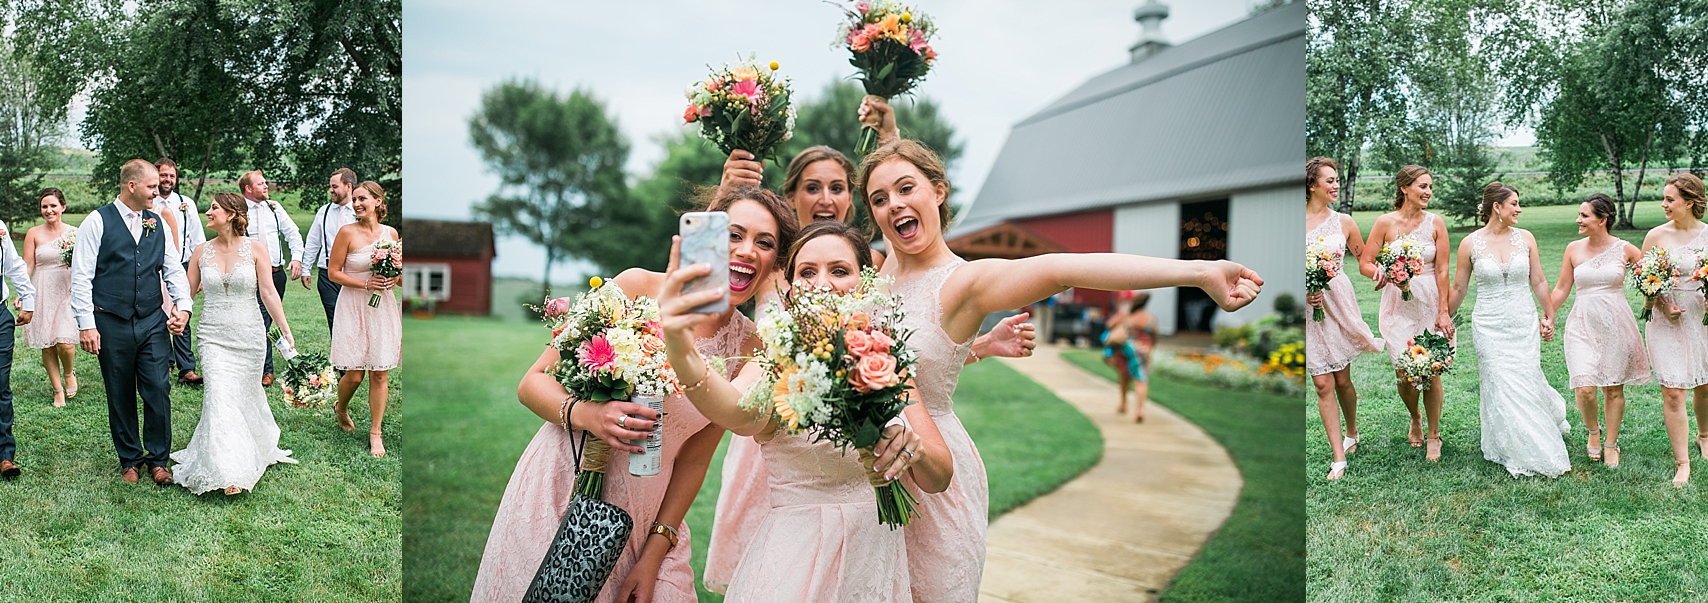 Minnesota Minneapolis Wedding Photographer Best Of 2018 Weddings Mallory Kiesow Photography_0021.jpg